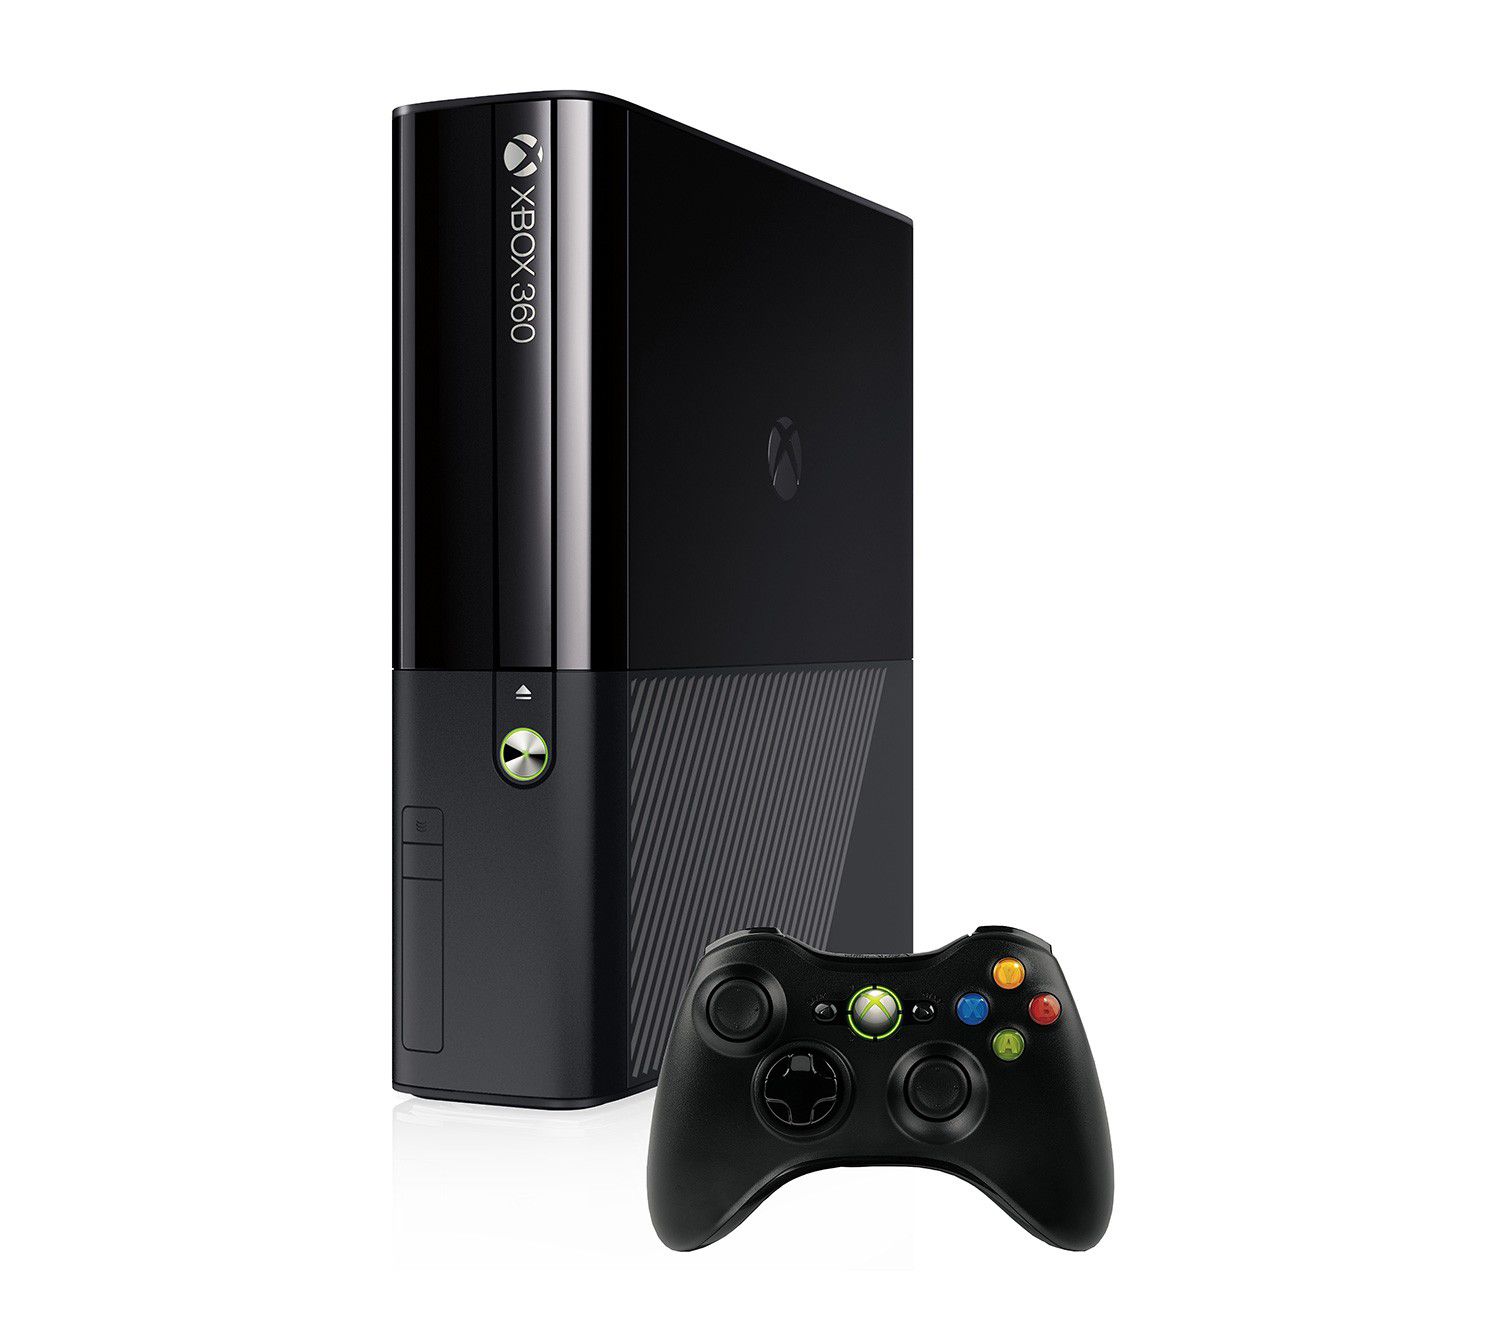 Console Xbox 360 Slim 4GB - Microsoft - Pc e Games !!!!!!!!!!! Pensou em  videogames e informática lembrou PceGames